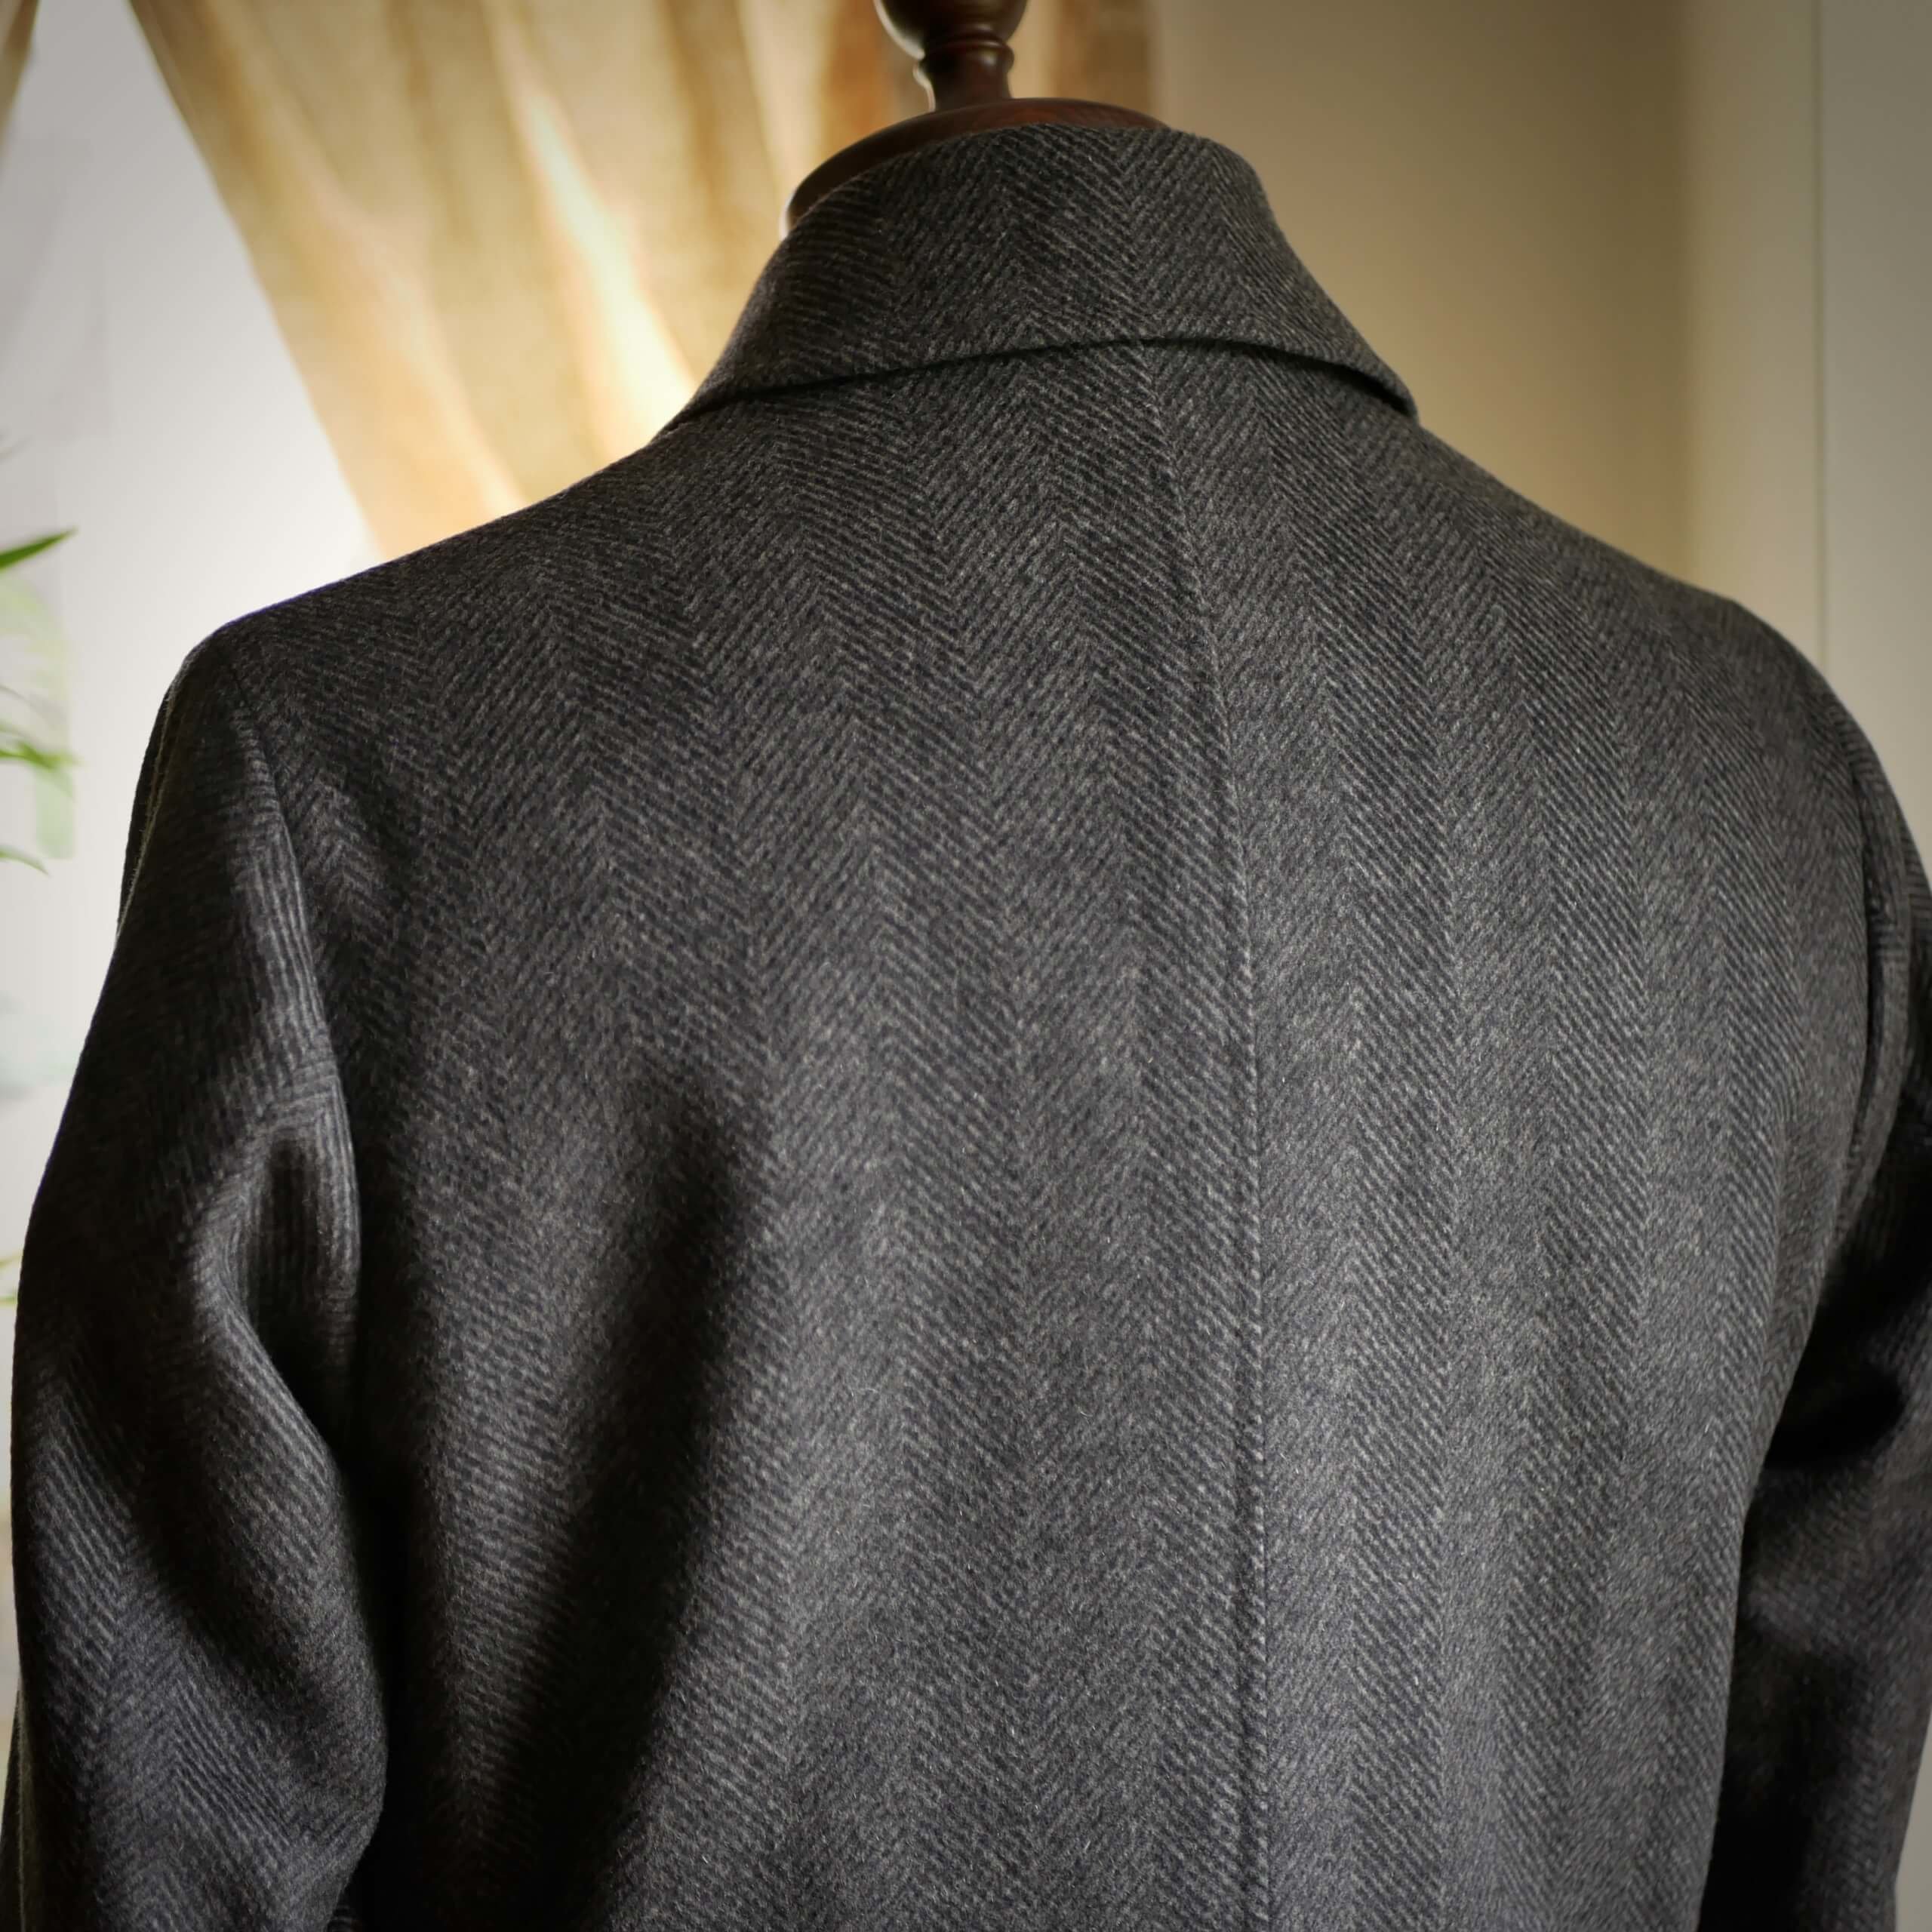 Overcoat_20210909_staincollar_coat_13.jpg